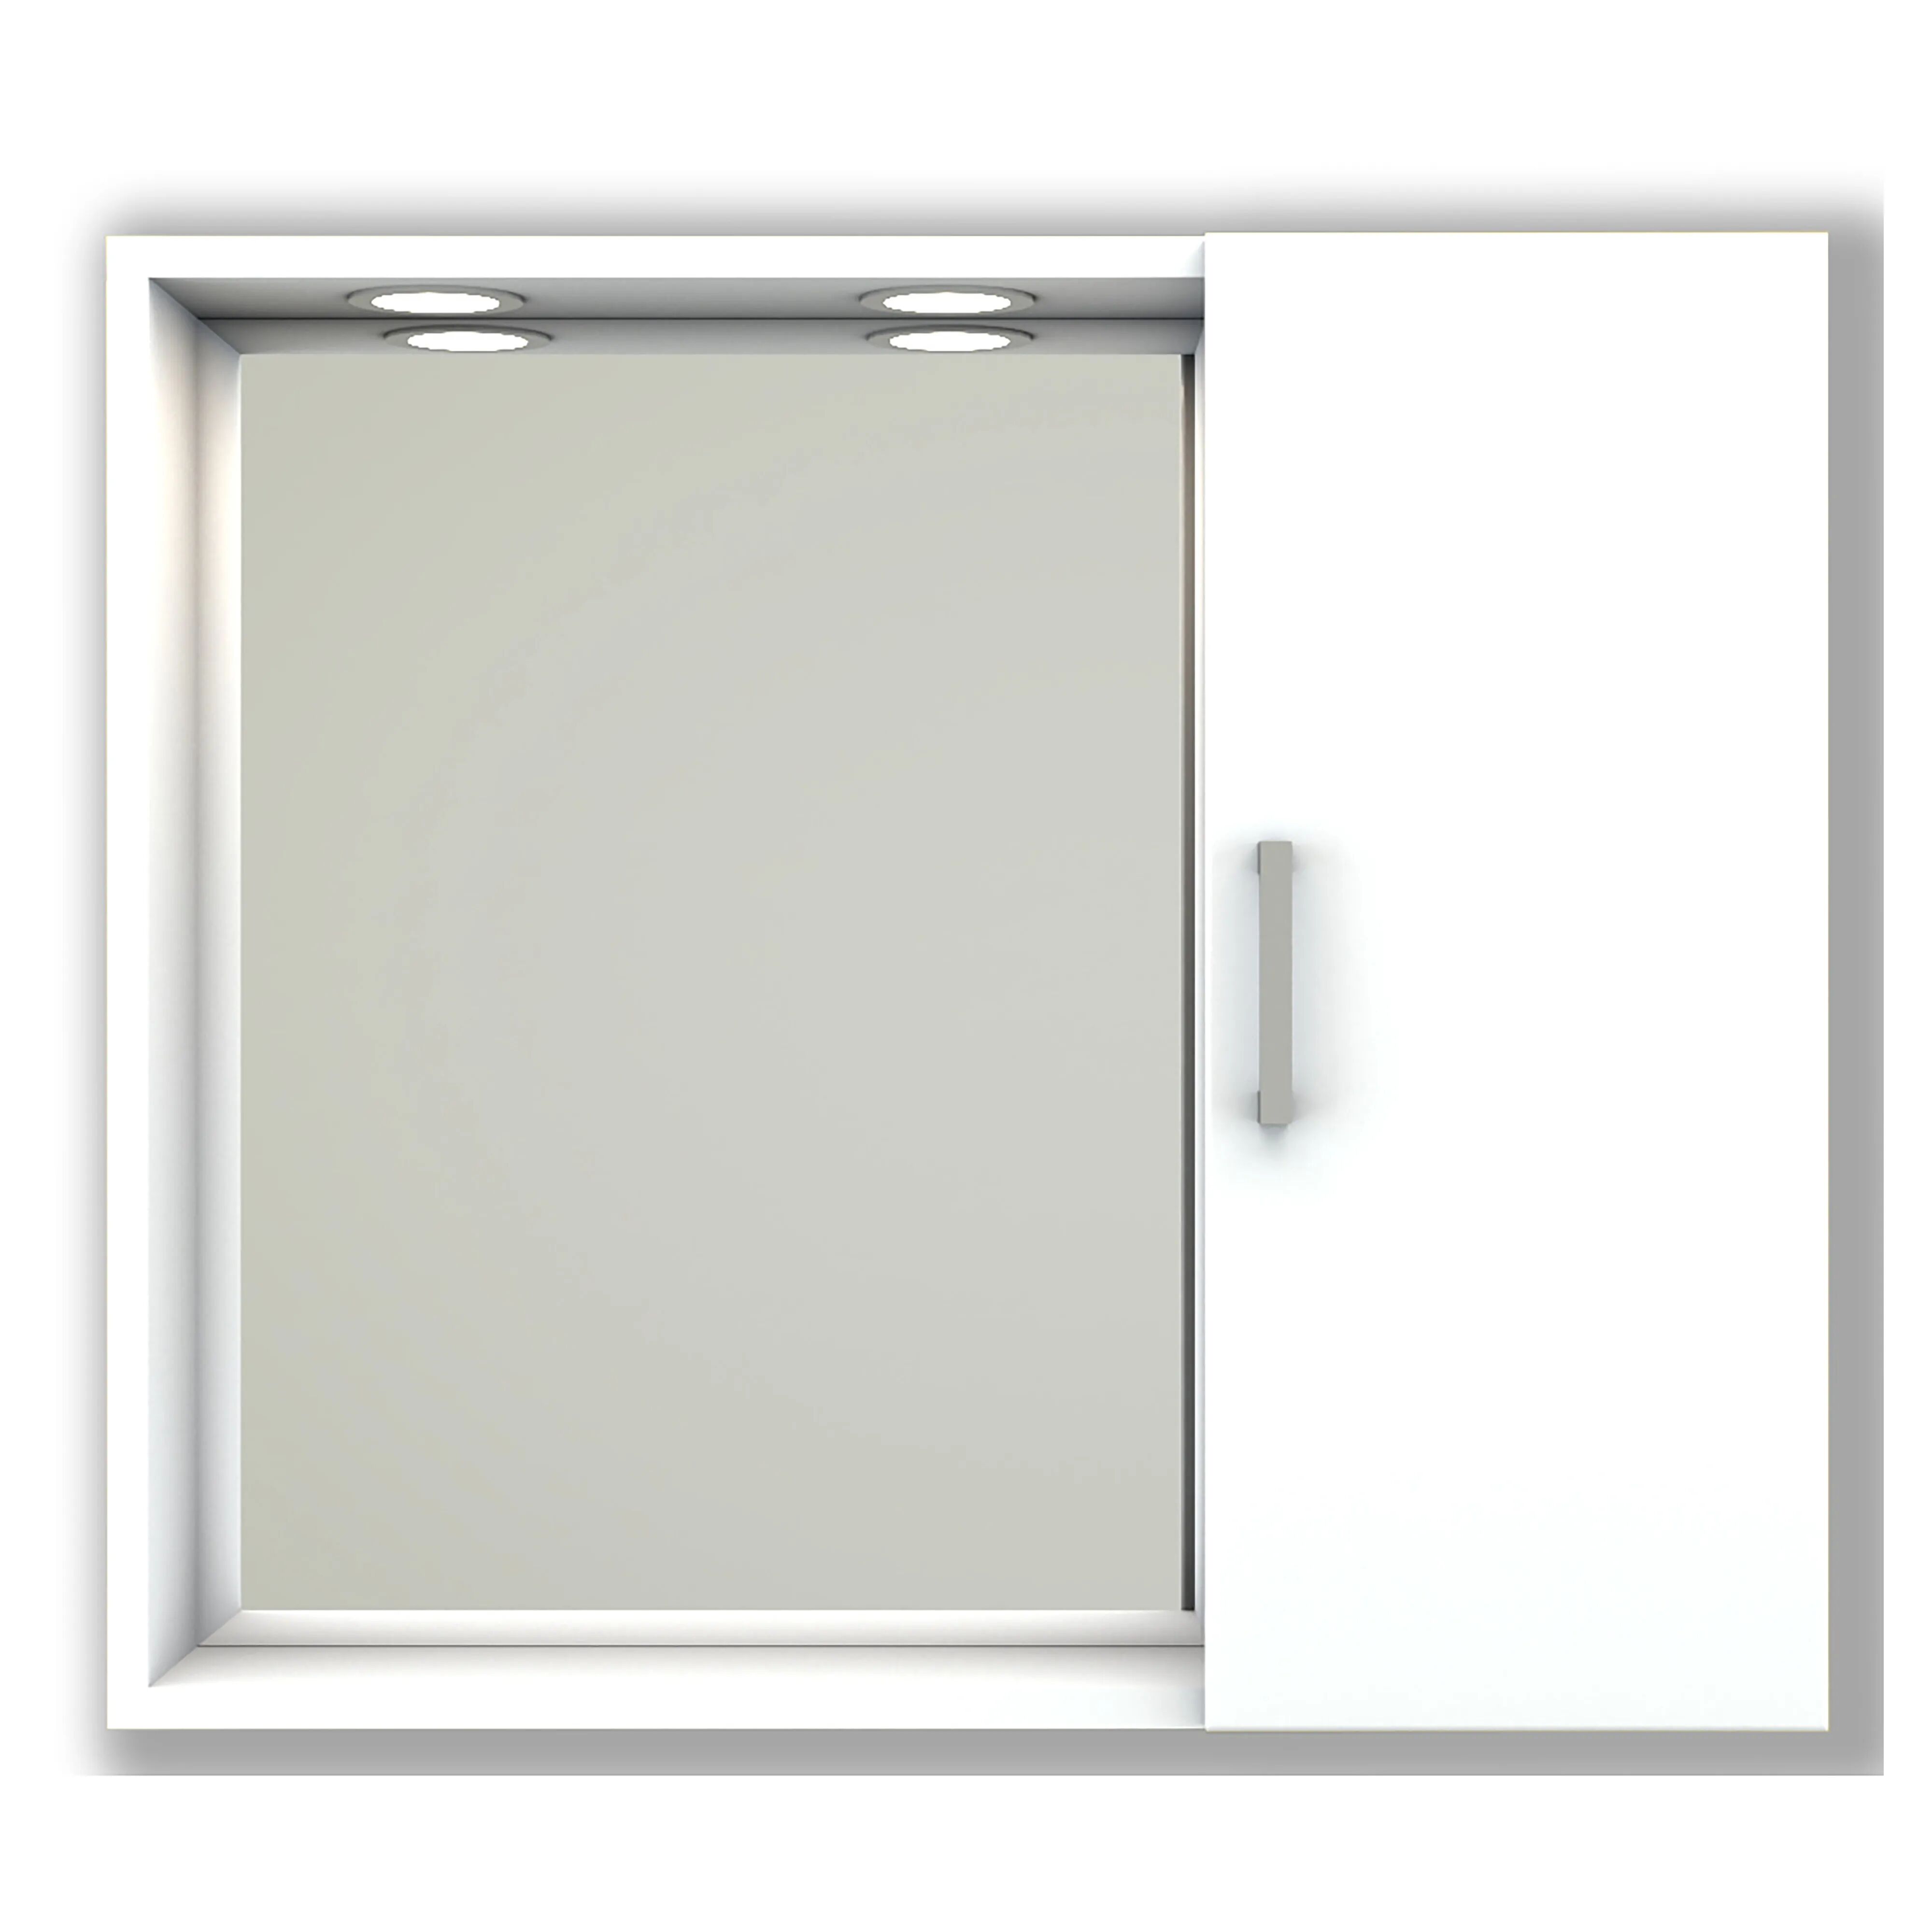 tecnomat armadietto specchio olga 1 anta destra 67x58x15 cm (lxhxp) legno bianco lucido 2 luci led 2w